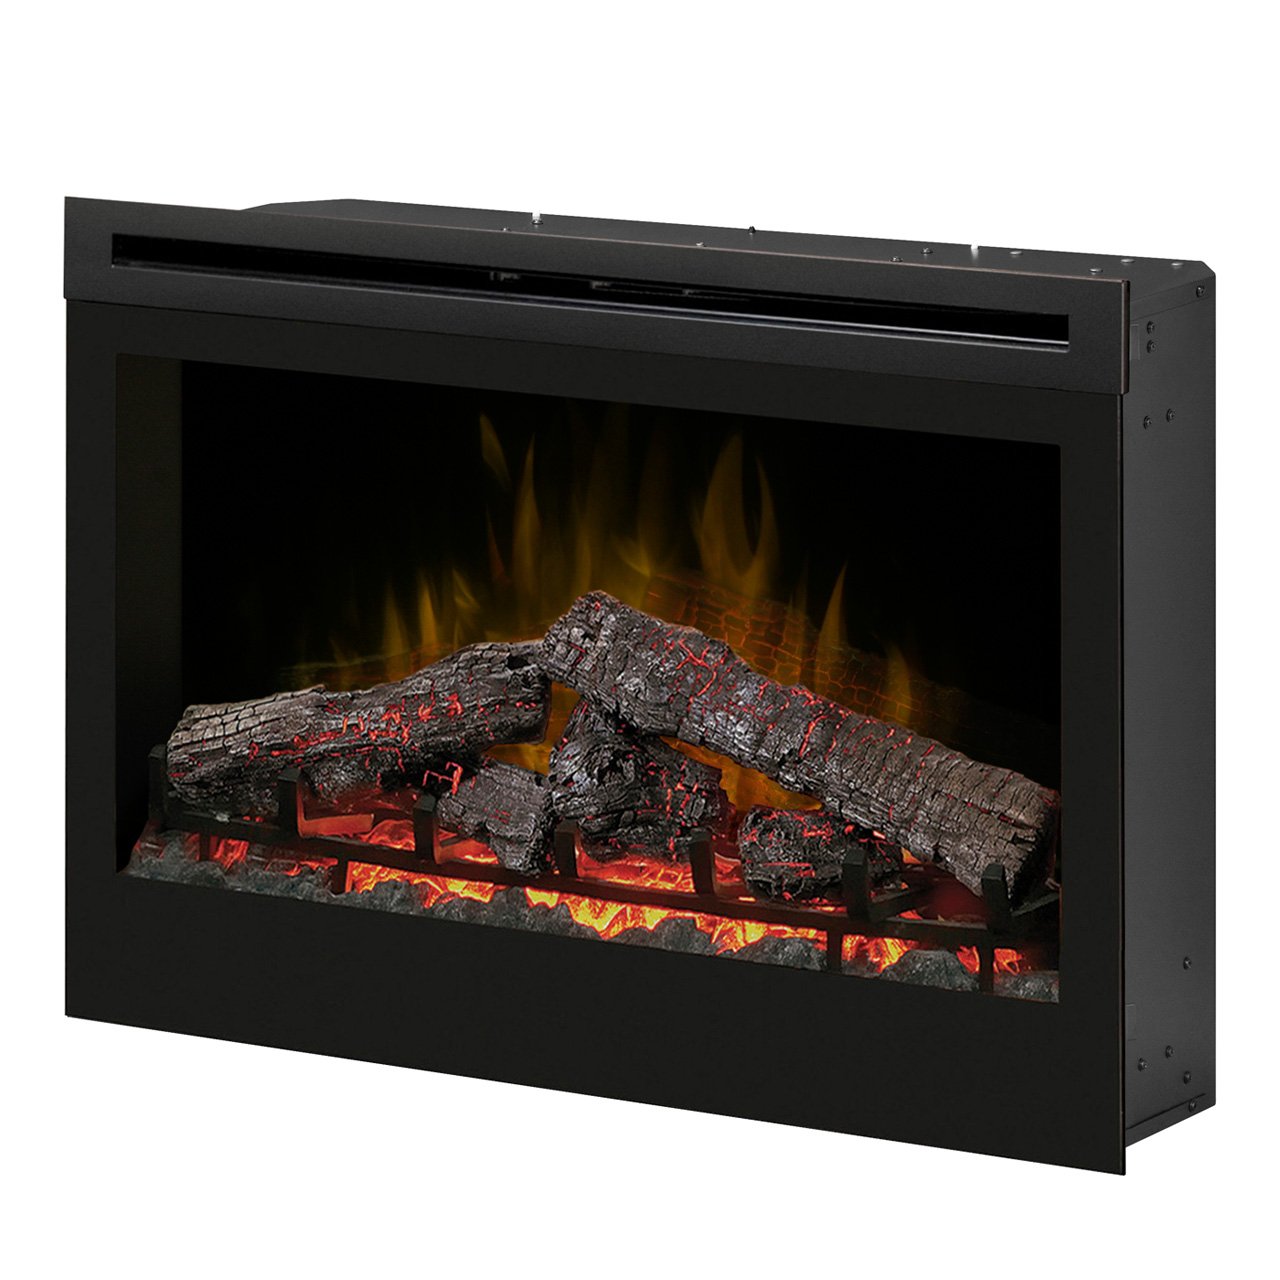 Cheap Fireplace Screens Elegant Dimplex Df3033st 33 Inch Self Trimming Electric Fireplace Insert